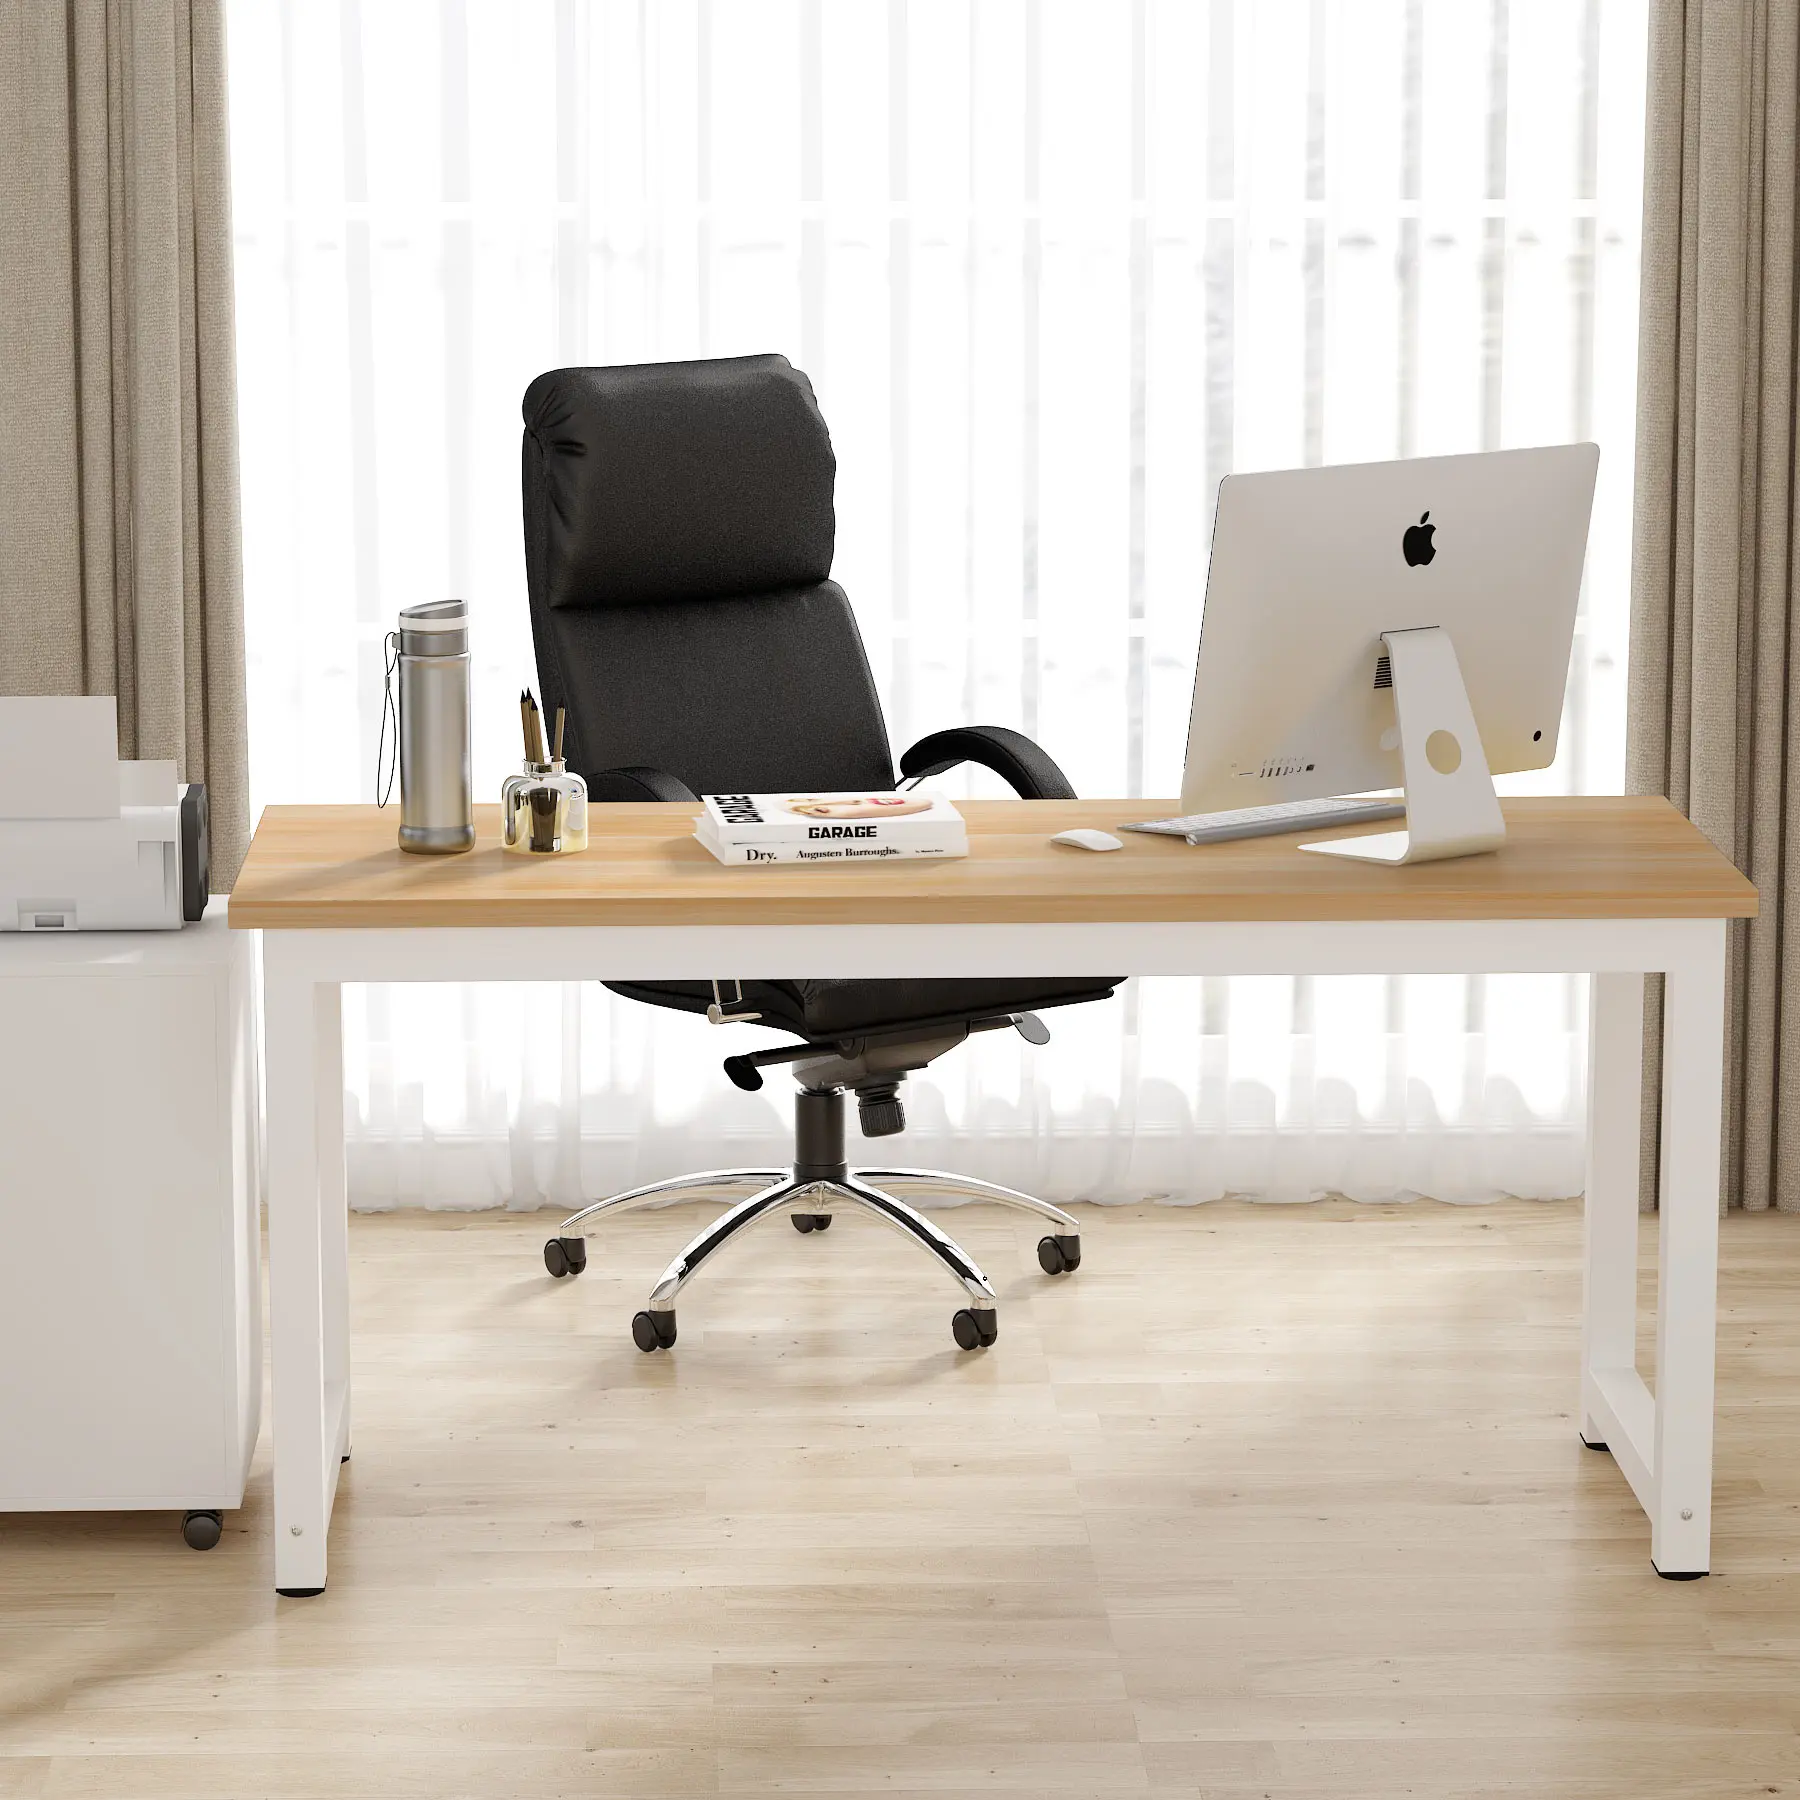 Supplier Office Desk Modern Office Furniture Wood Computer Table For Study Writing Desks